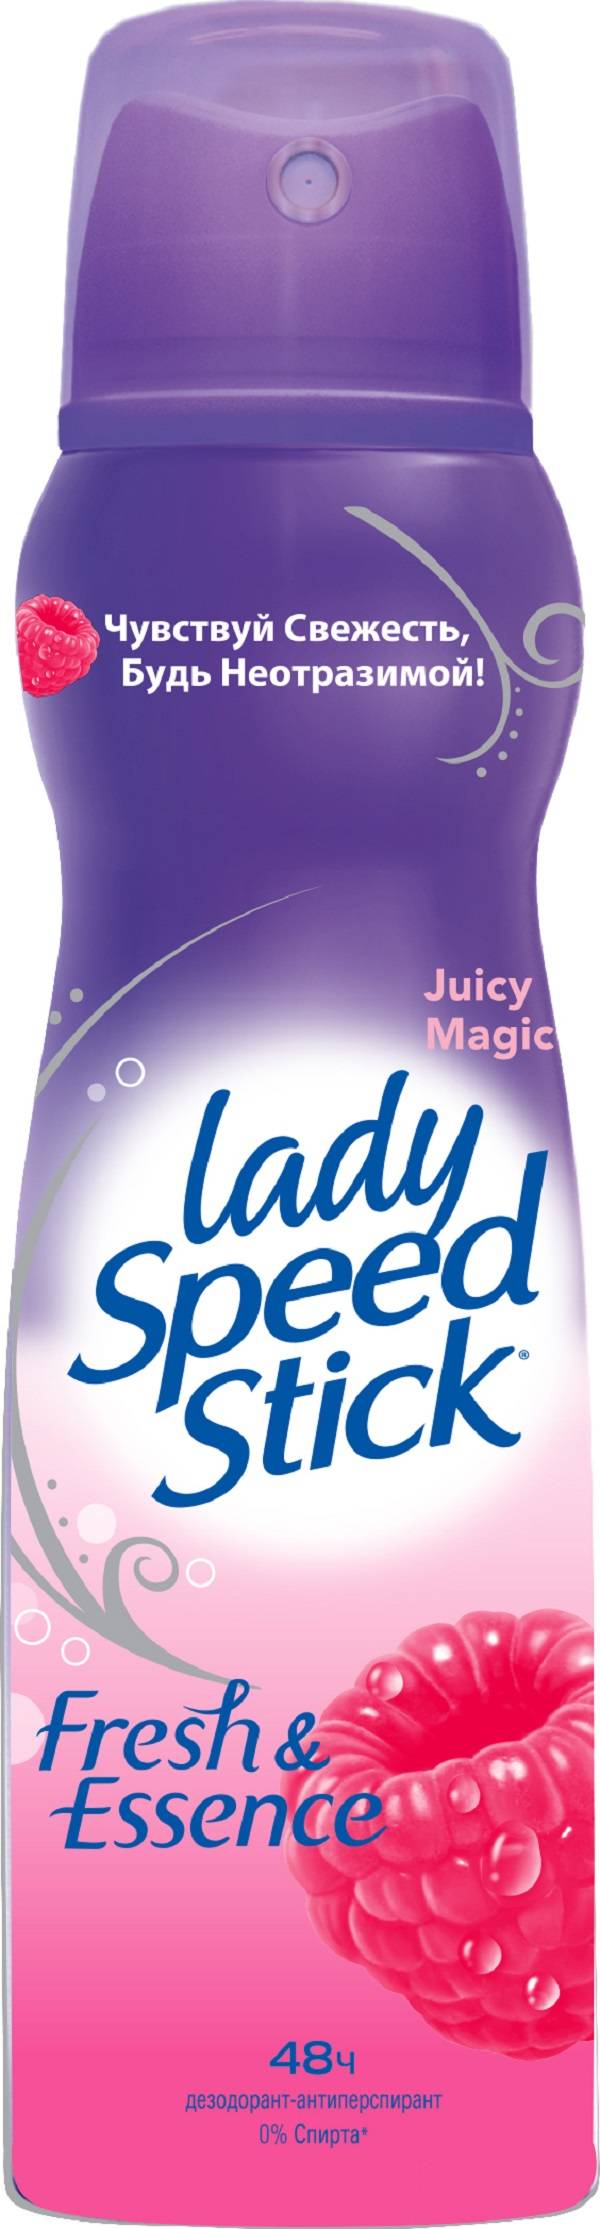 Magic fresh. Антиперспирант Lady Speed Stick. Дезодорант Lady Speed Stick спрей 150мл. Lady Speed Stick Fresh&Essence cool Fantasy цветок вишни. Дезодорант-антиперспирант Lady Speed Stick спрей juicy Magic малина 150мл.